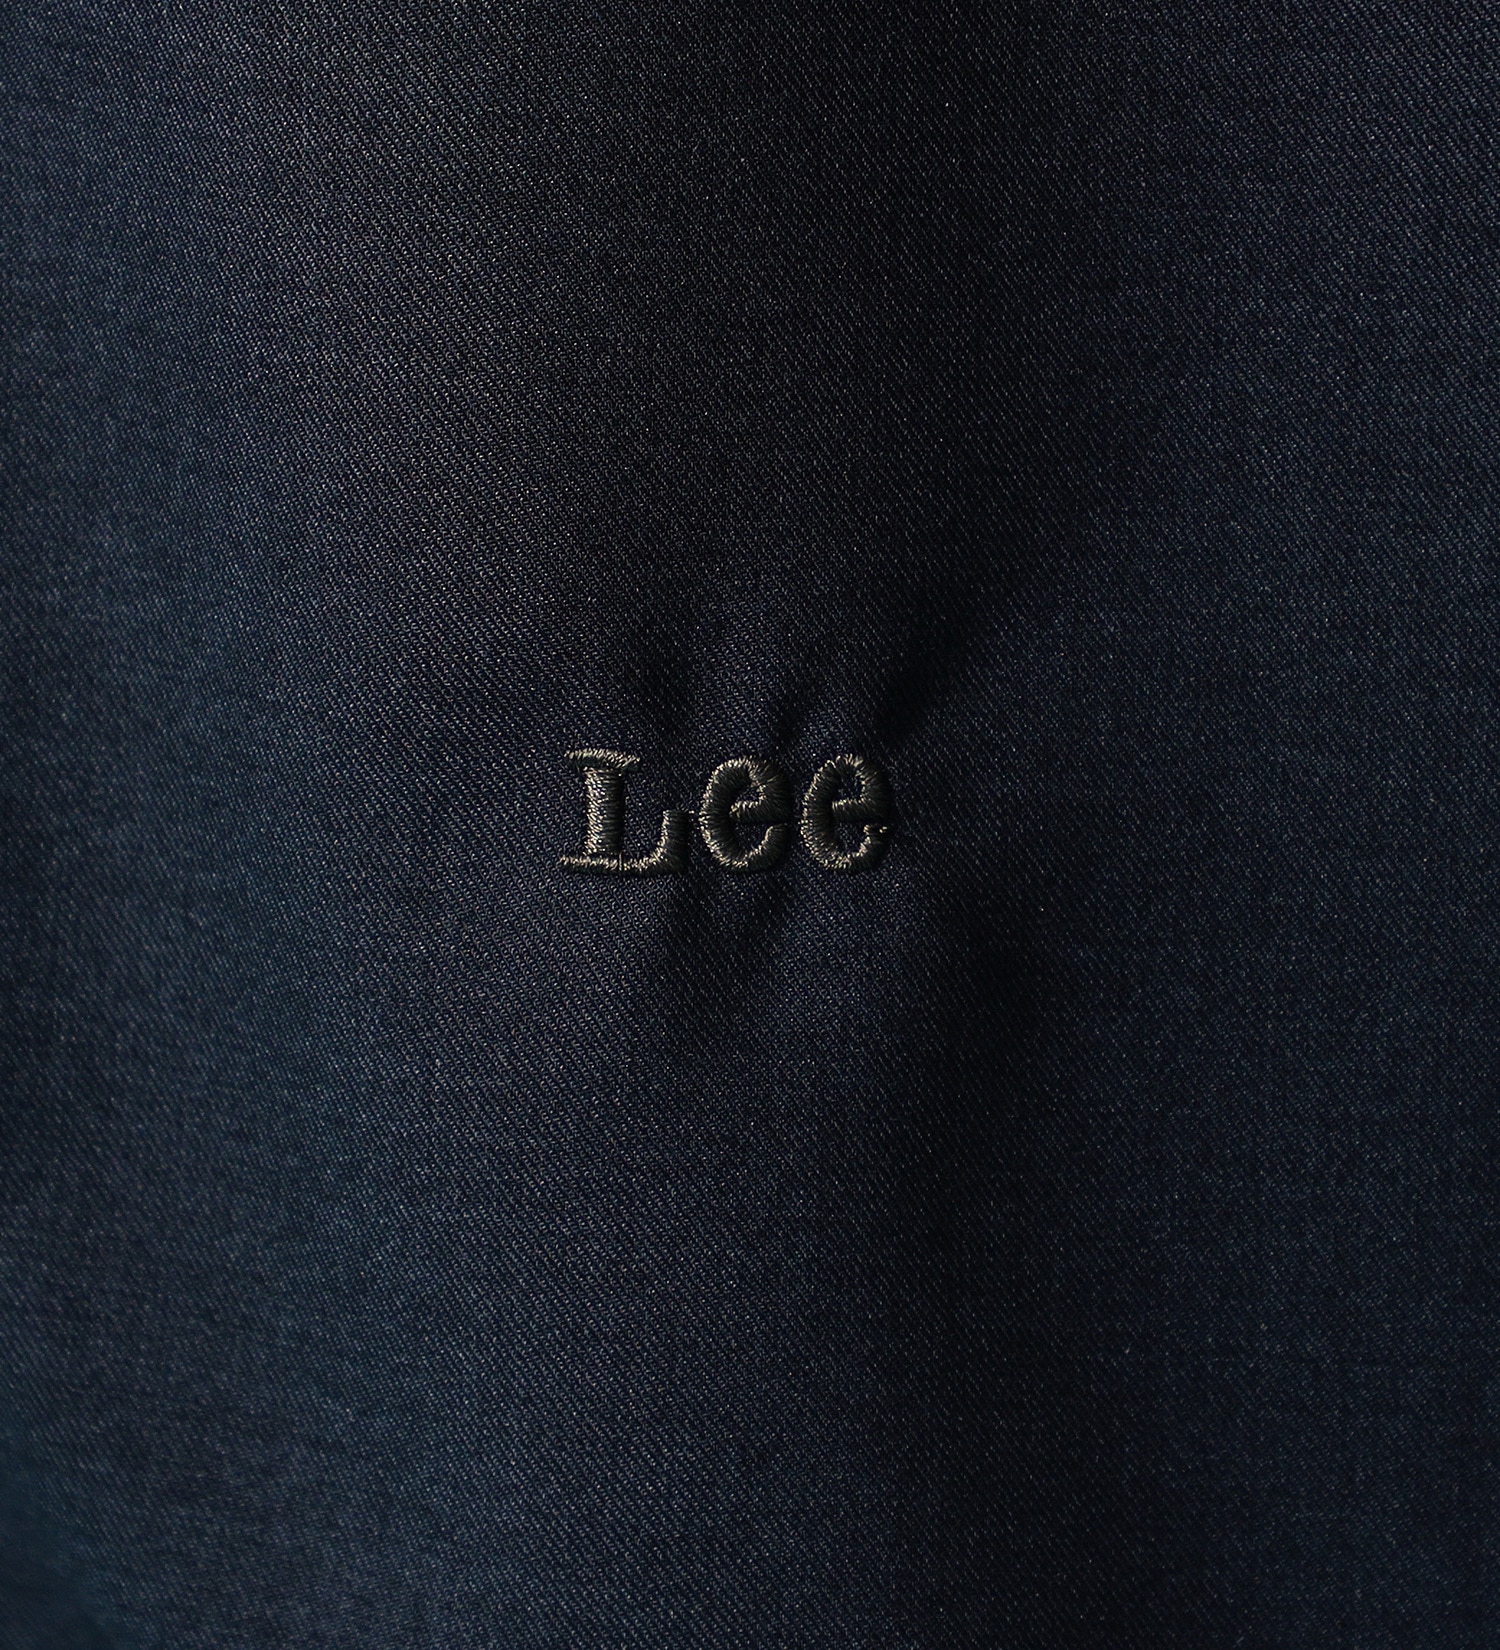 Lee(リー)のオープンカラーシャツ|トップス/シャツ/ブラウス/メンズ|チャコールグレー